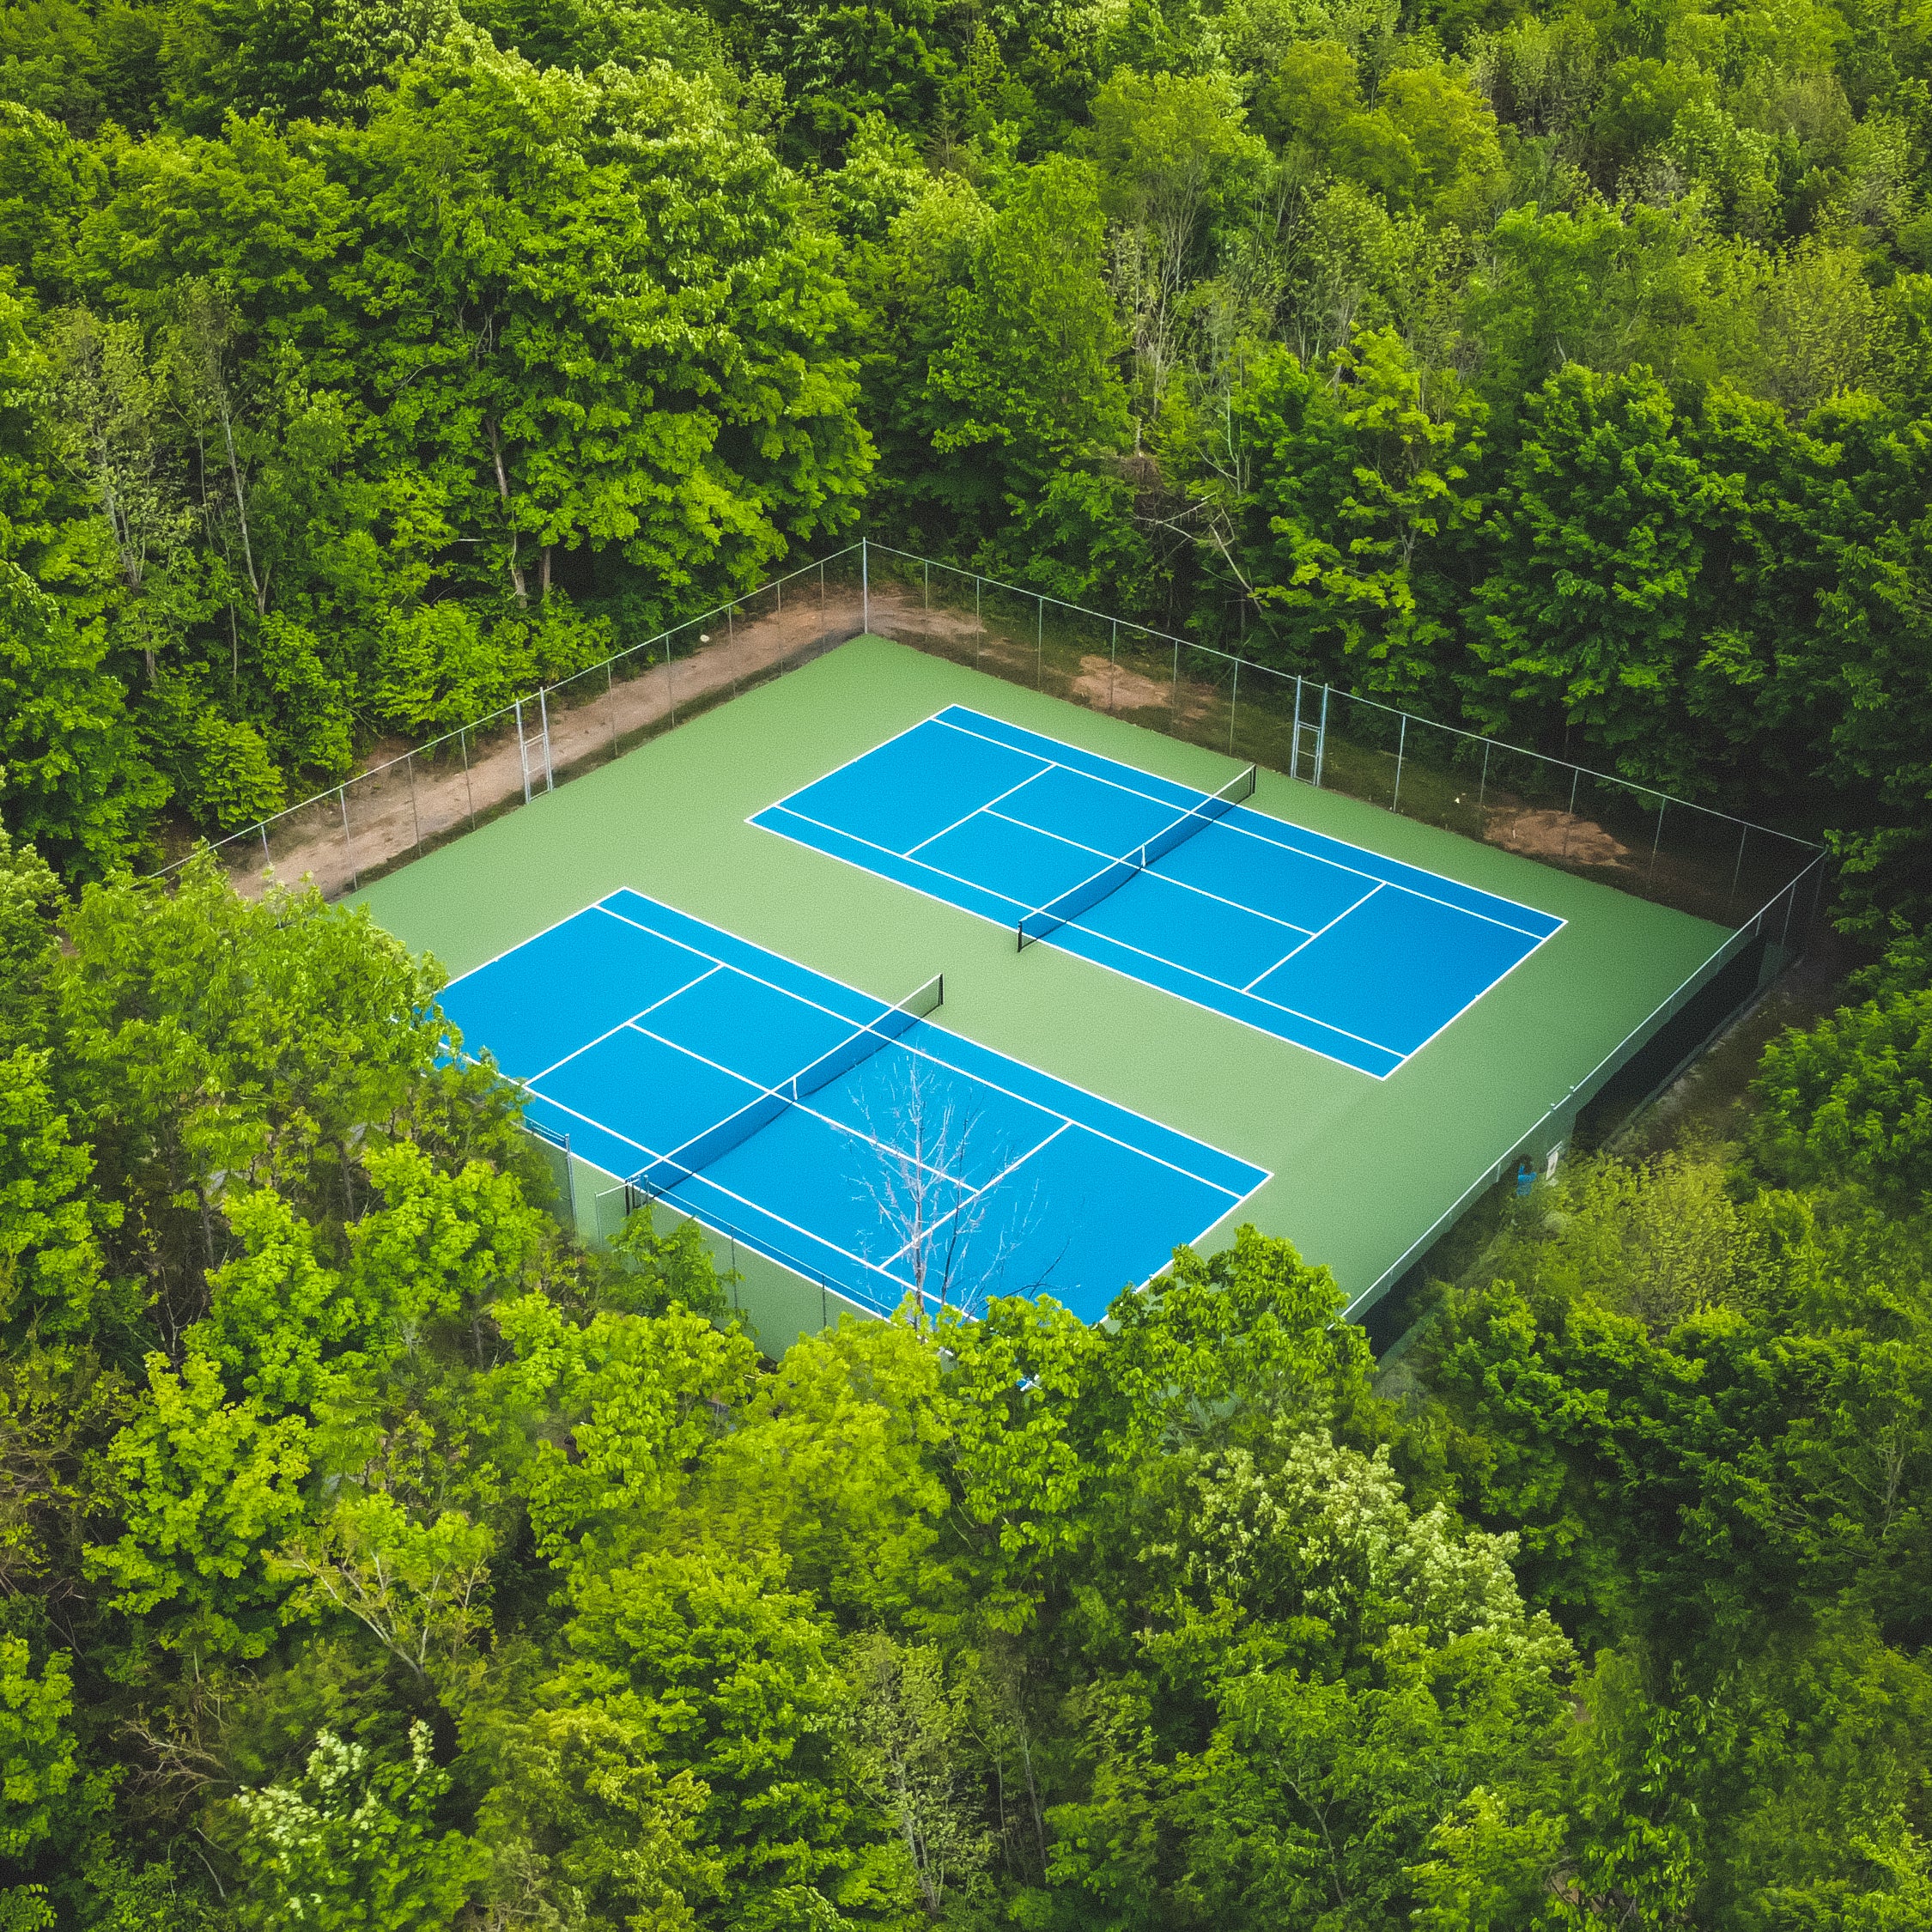 Tennis Posts & Nets